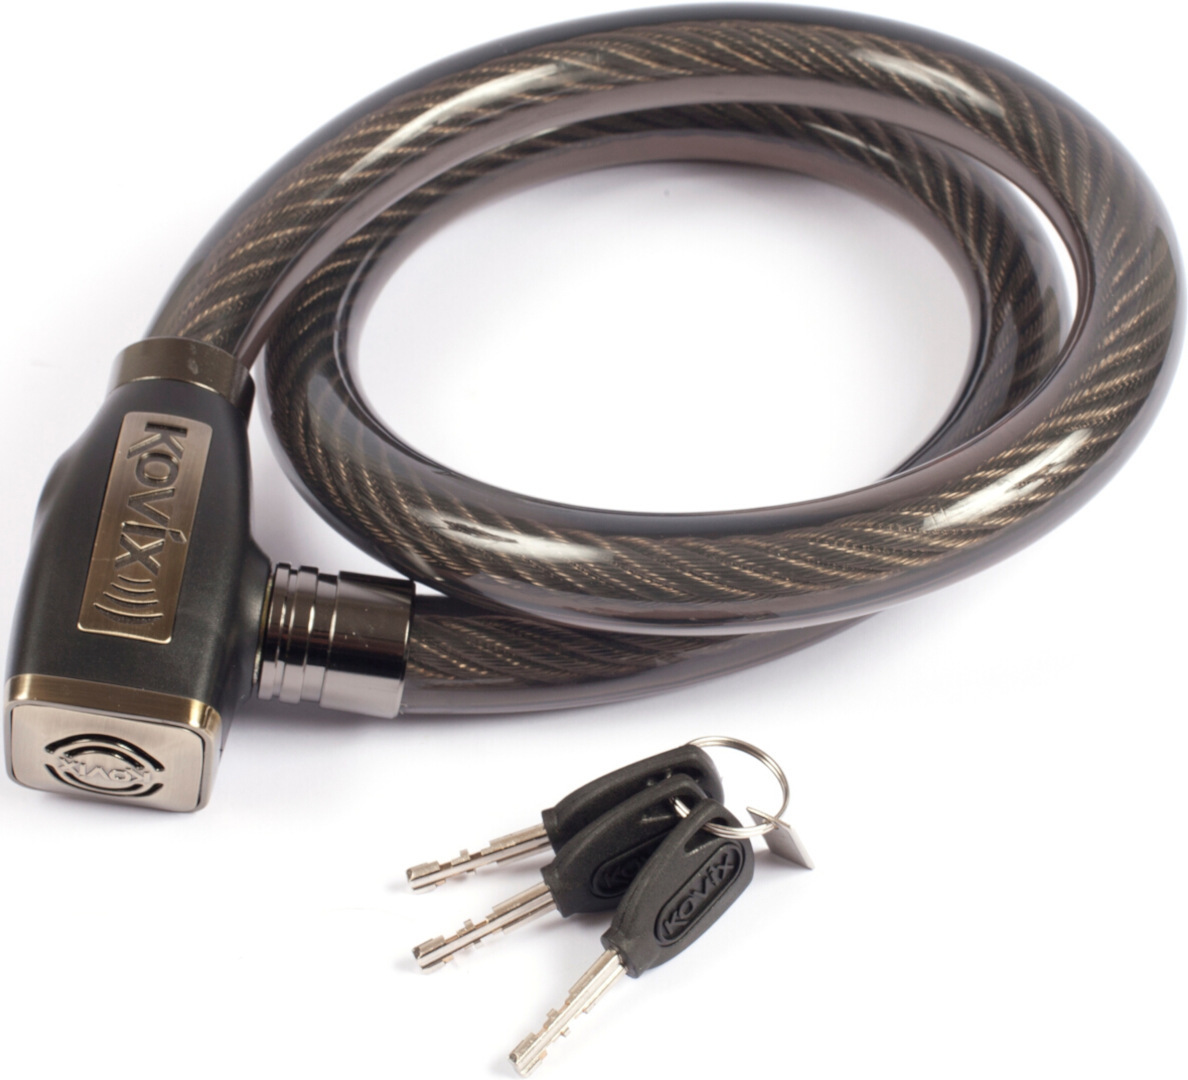 Kovix KWL24 Alarm Cable Lock, grey, Size 110 cm, grey, Size 110 cm